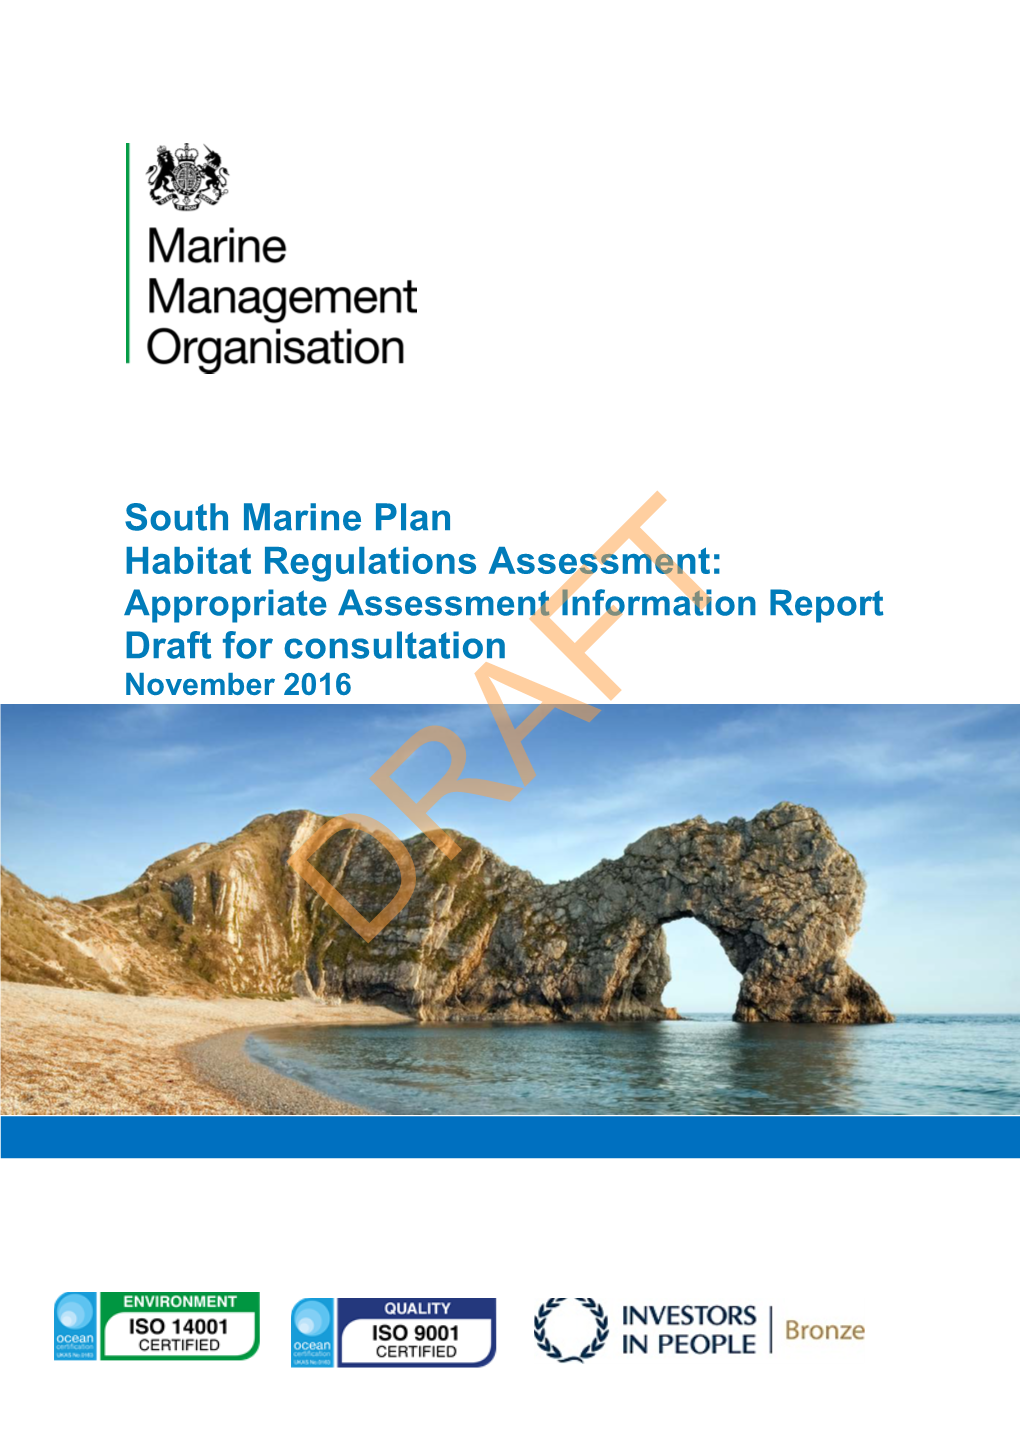 South Marine Plan Habitat Regulations Assessment: Draft For